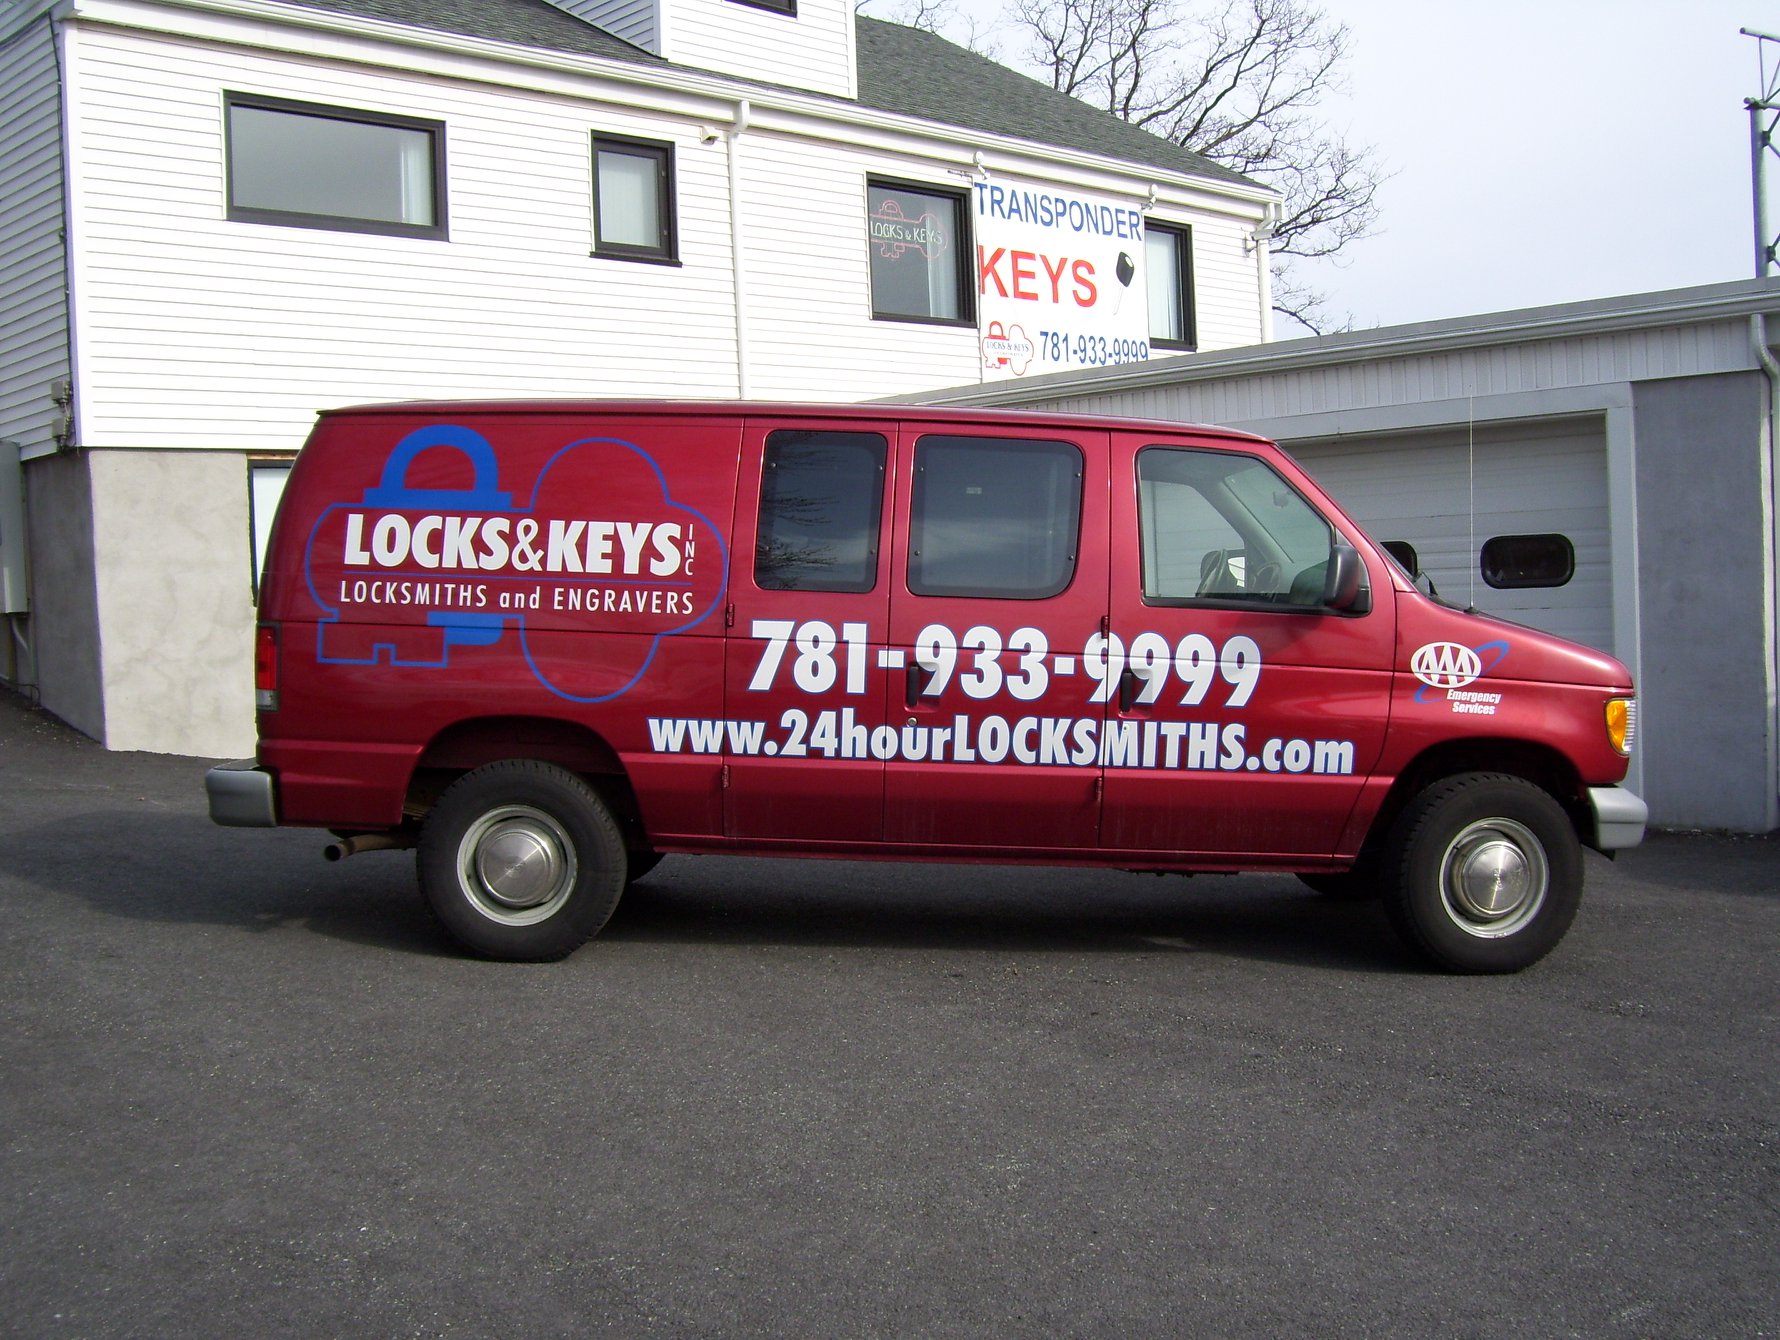 Locks & Keys Inc. - Emergency Services - Arlington MA locksmith